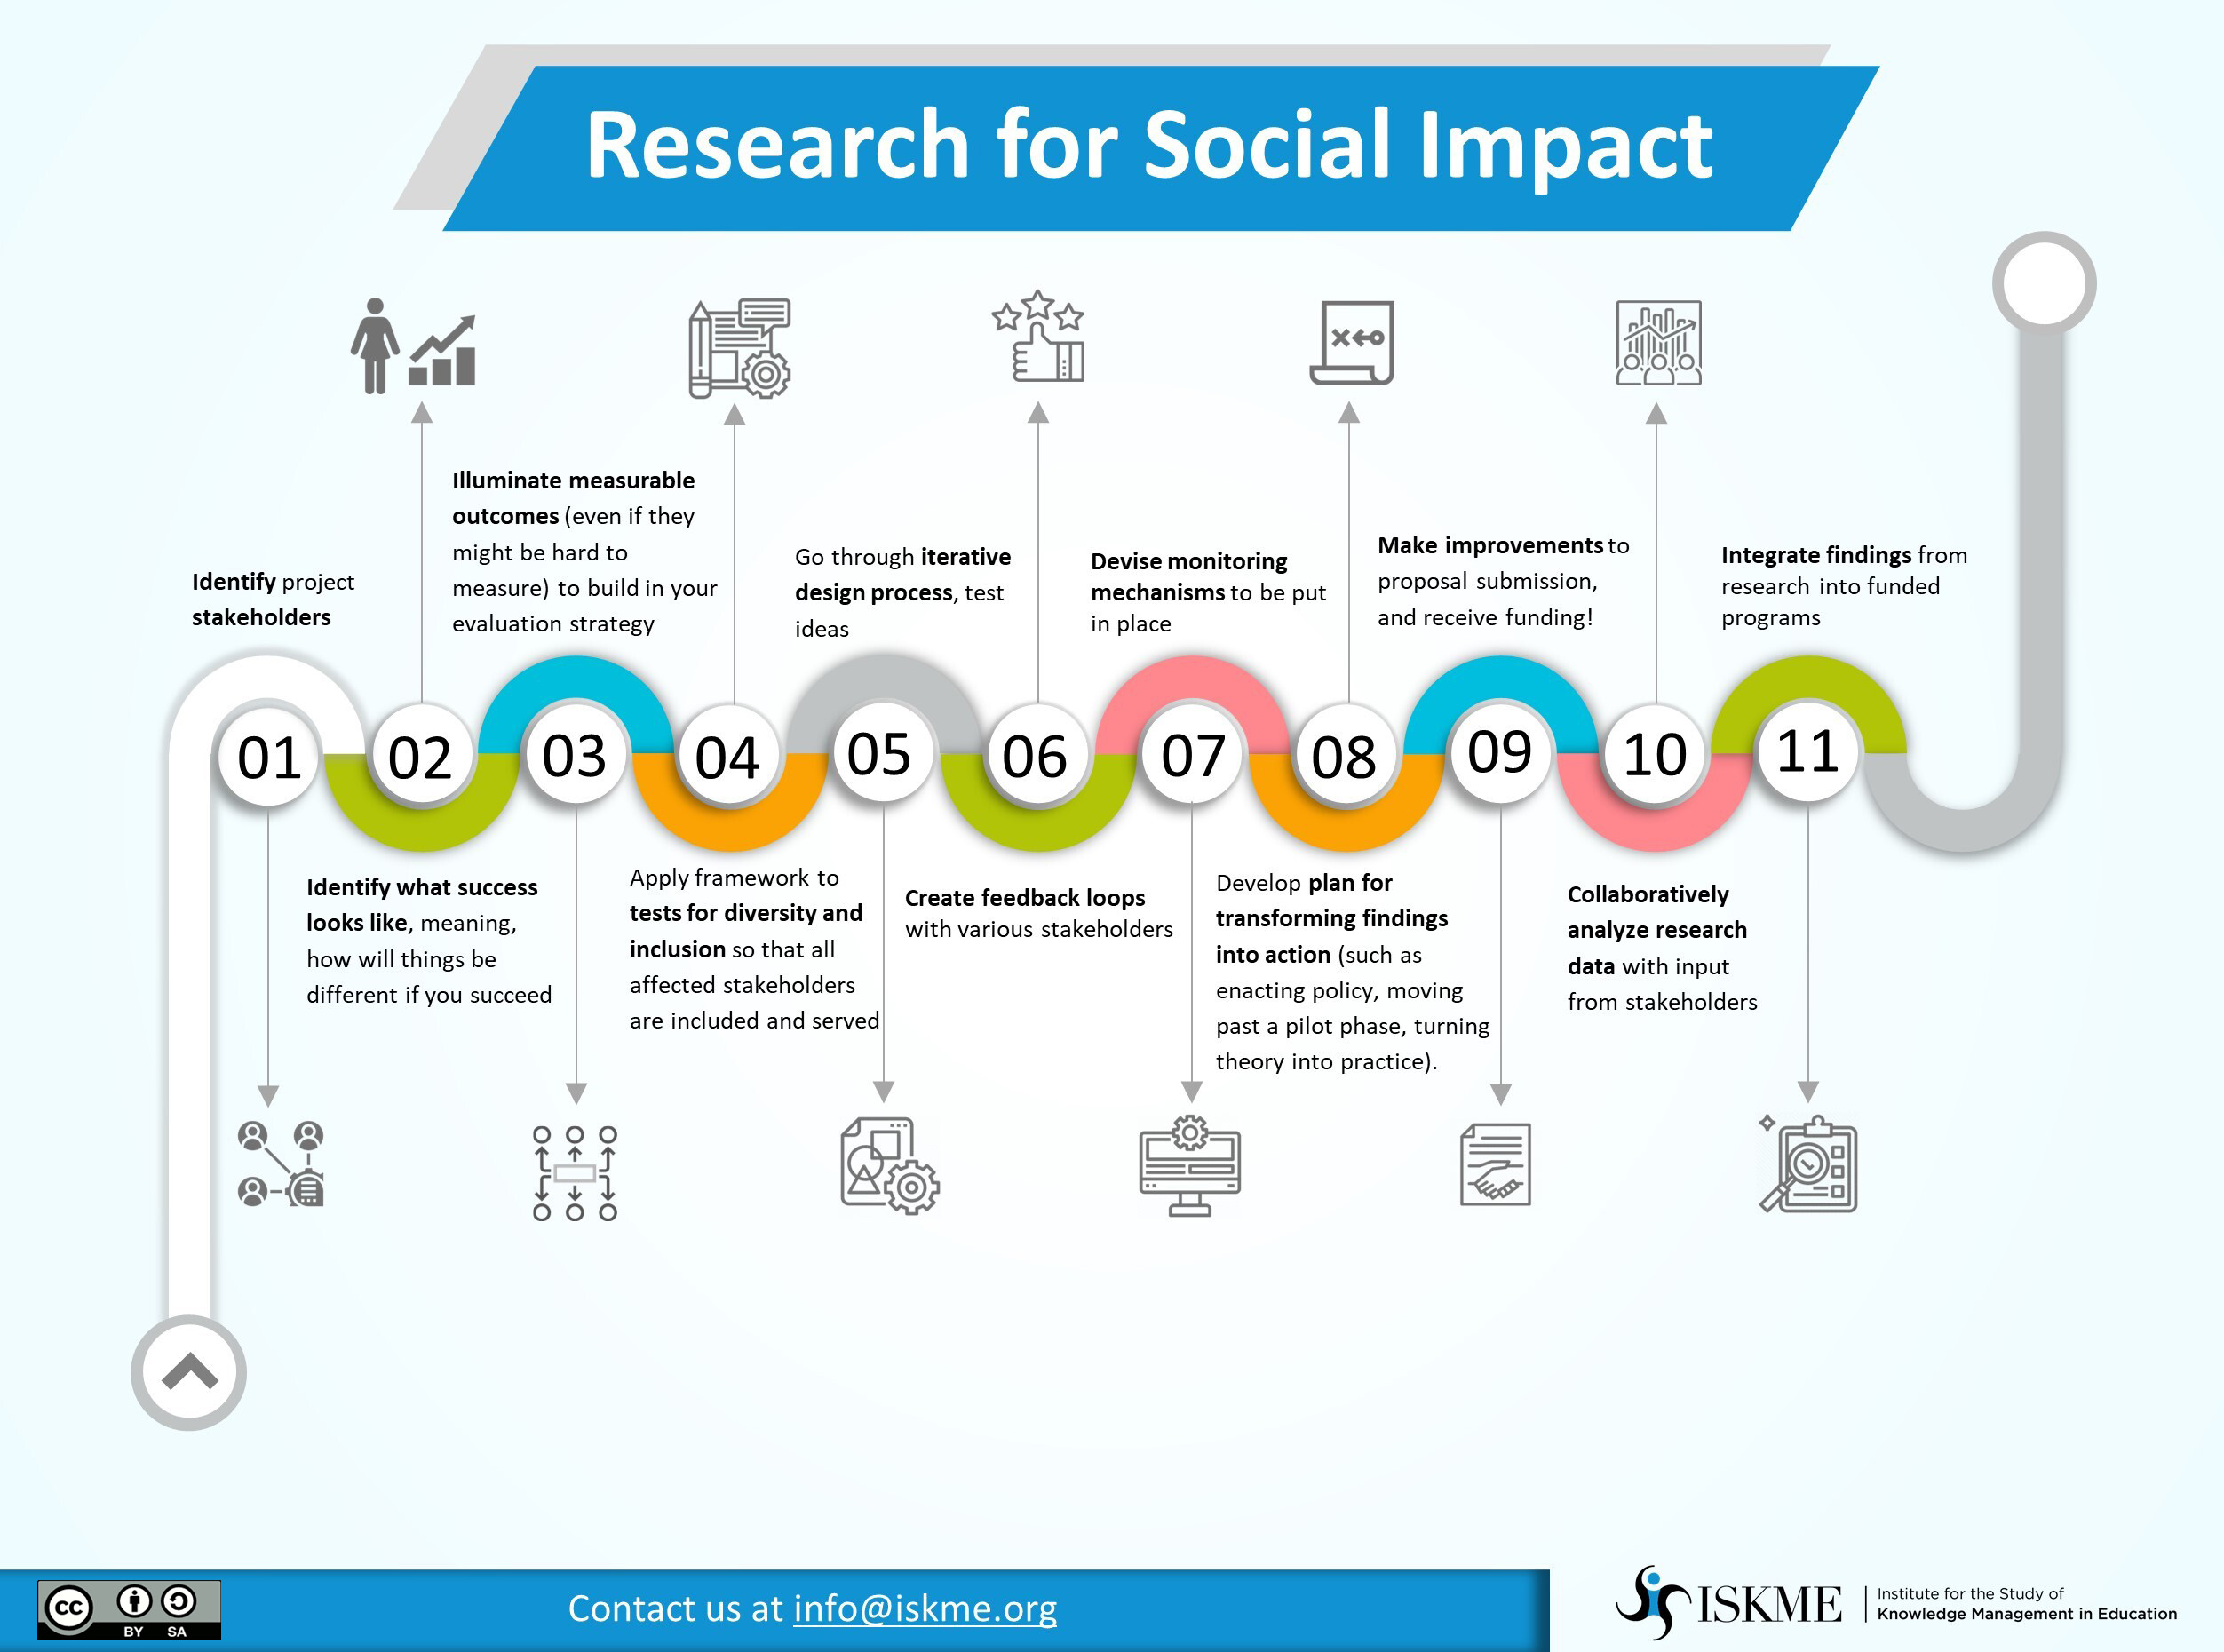 social work research impact factor